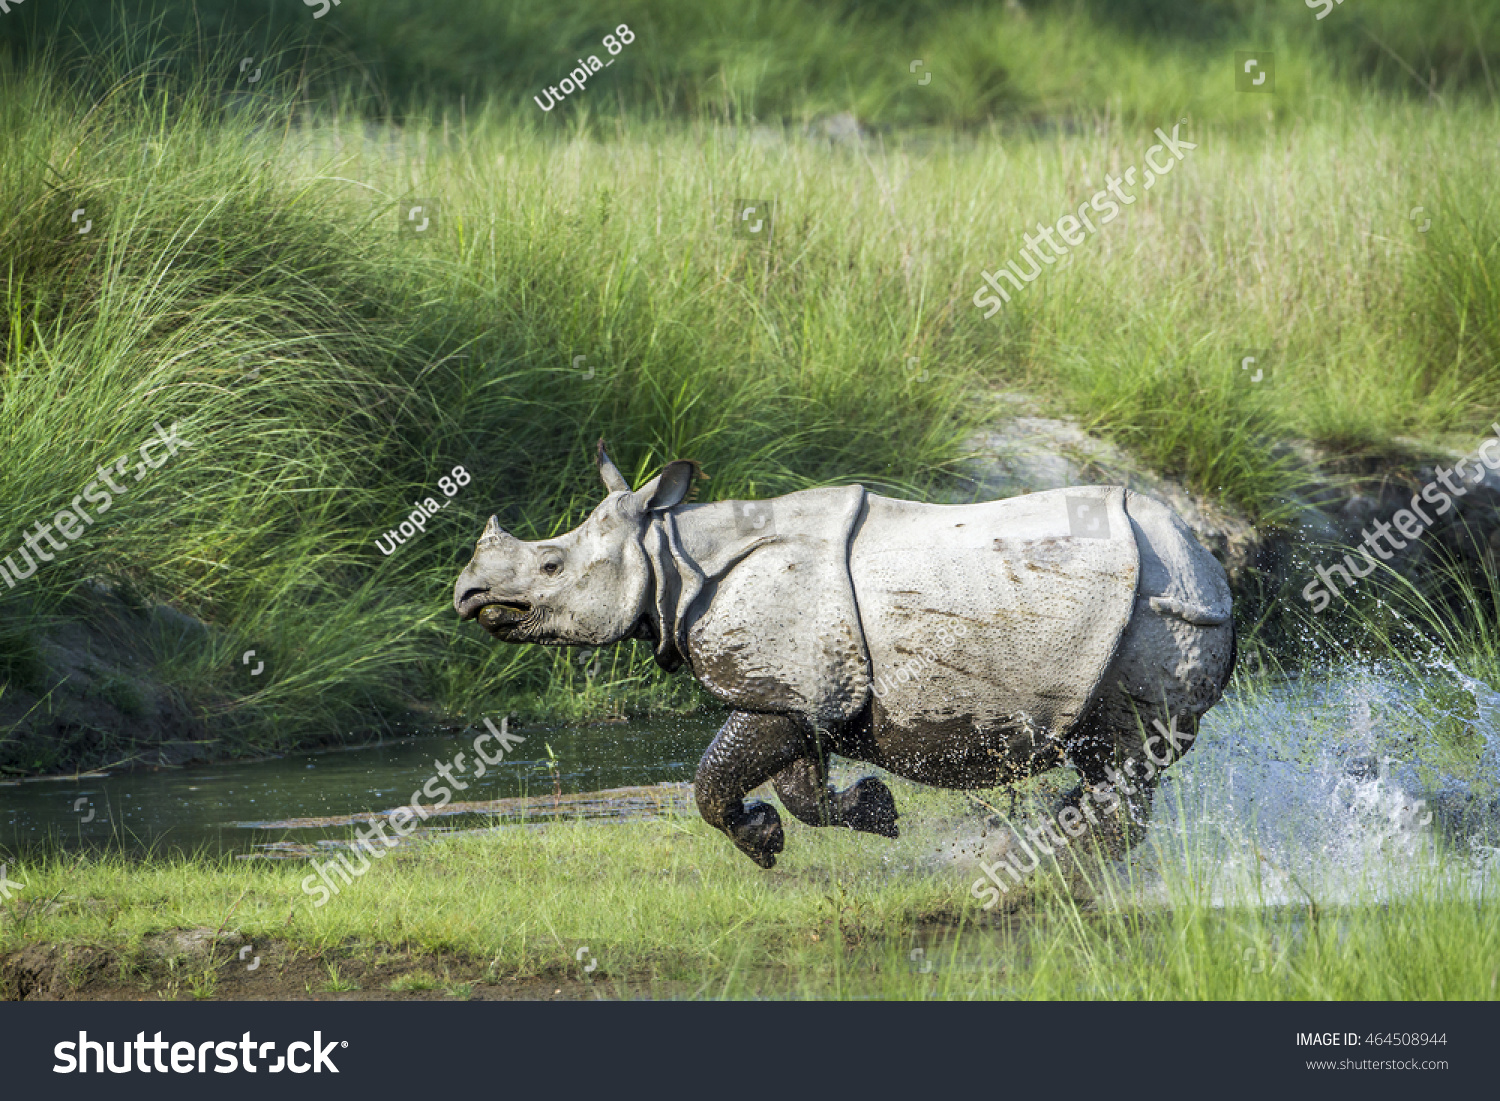 Greater one-horned rhinoceros in Bardia national park, Nepal ; specie Rhinoceros unicornis family of Rhinocerotidae #464508944